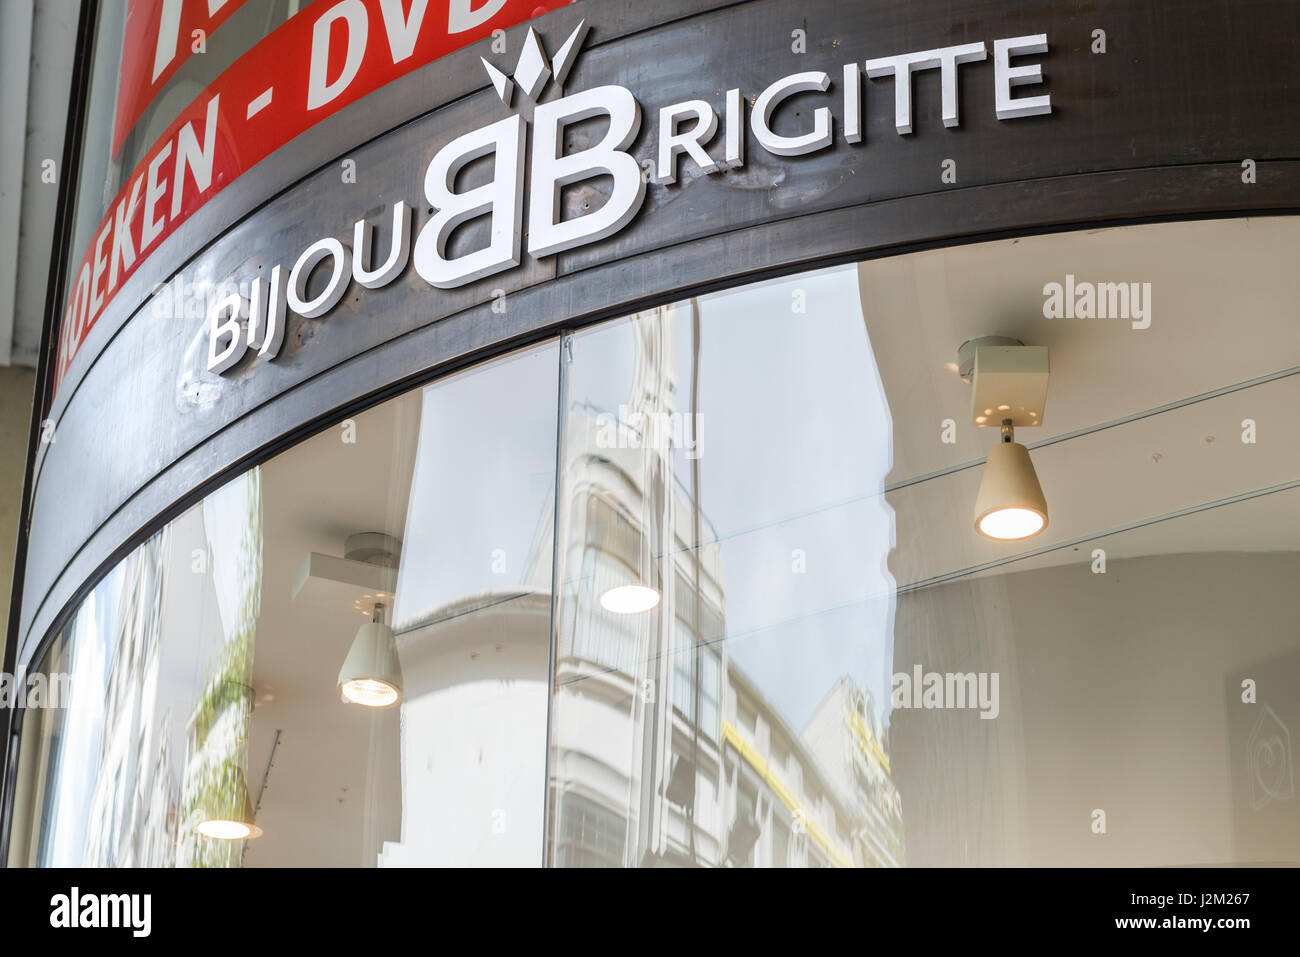 Bijou brigitte logo hi-res stock photography and images - Alamy